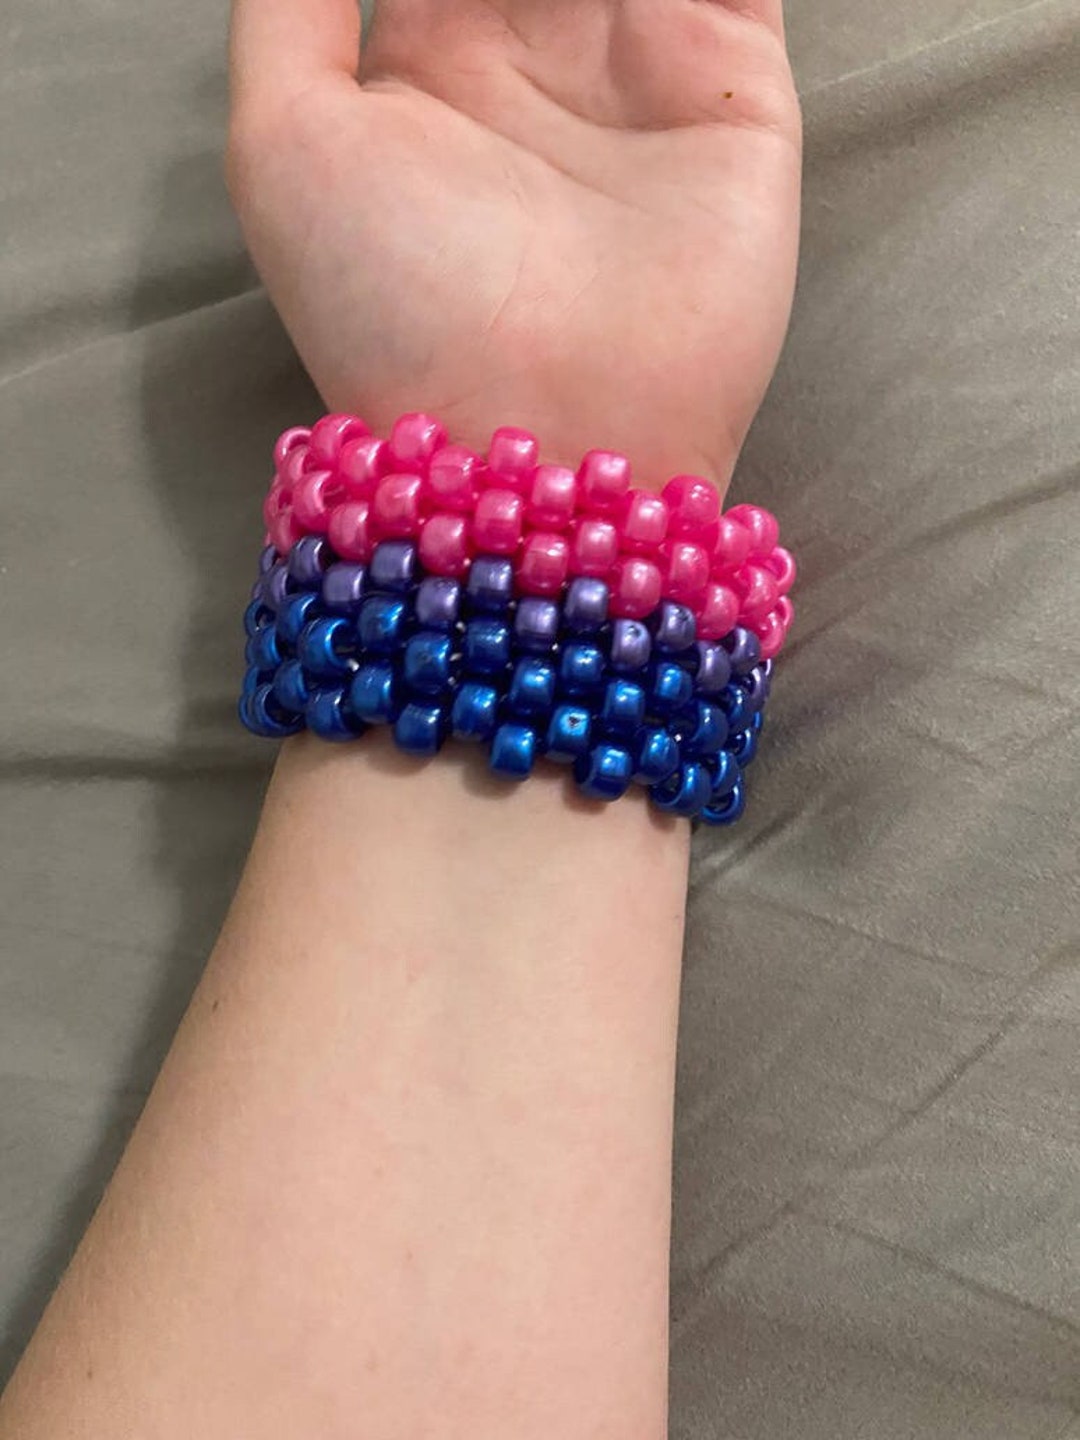 Kandi cuff bracelet, bi-pride triangles, forearm/large, pink blue